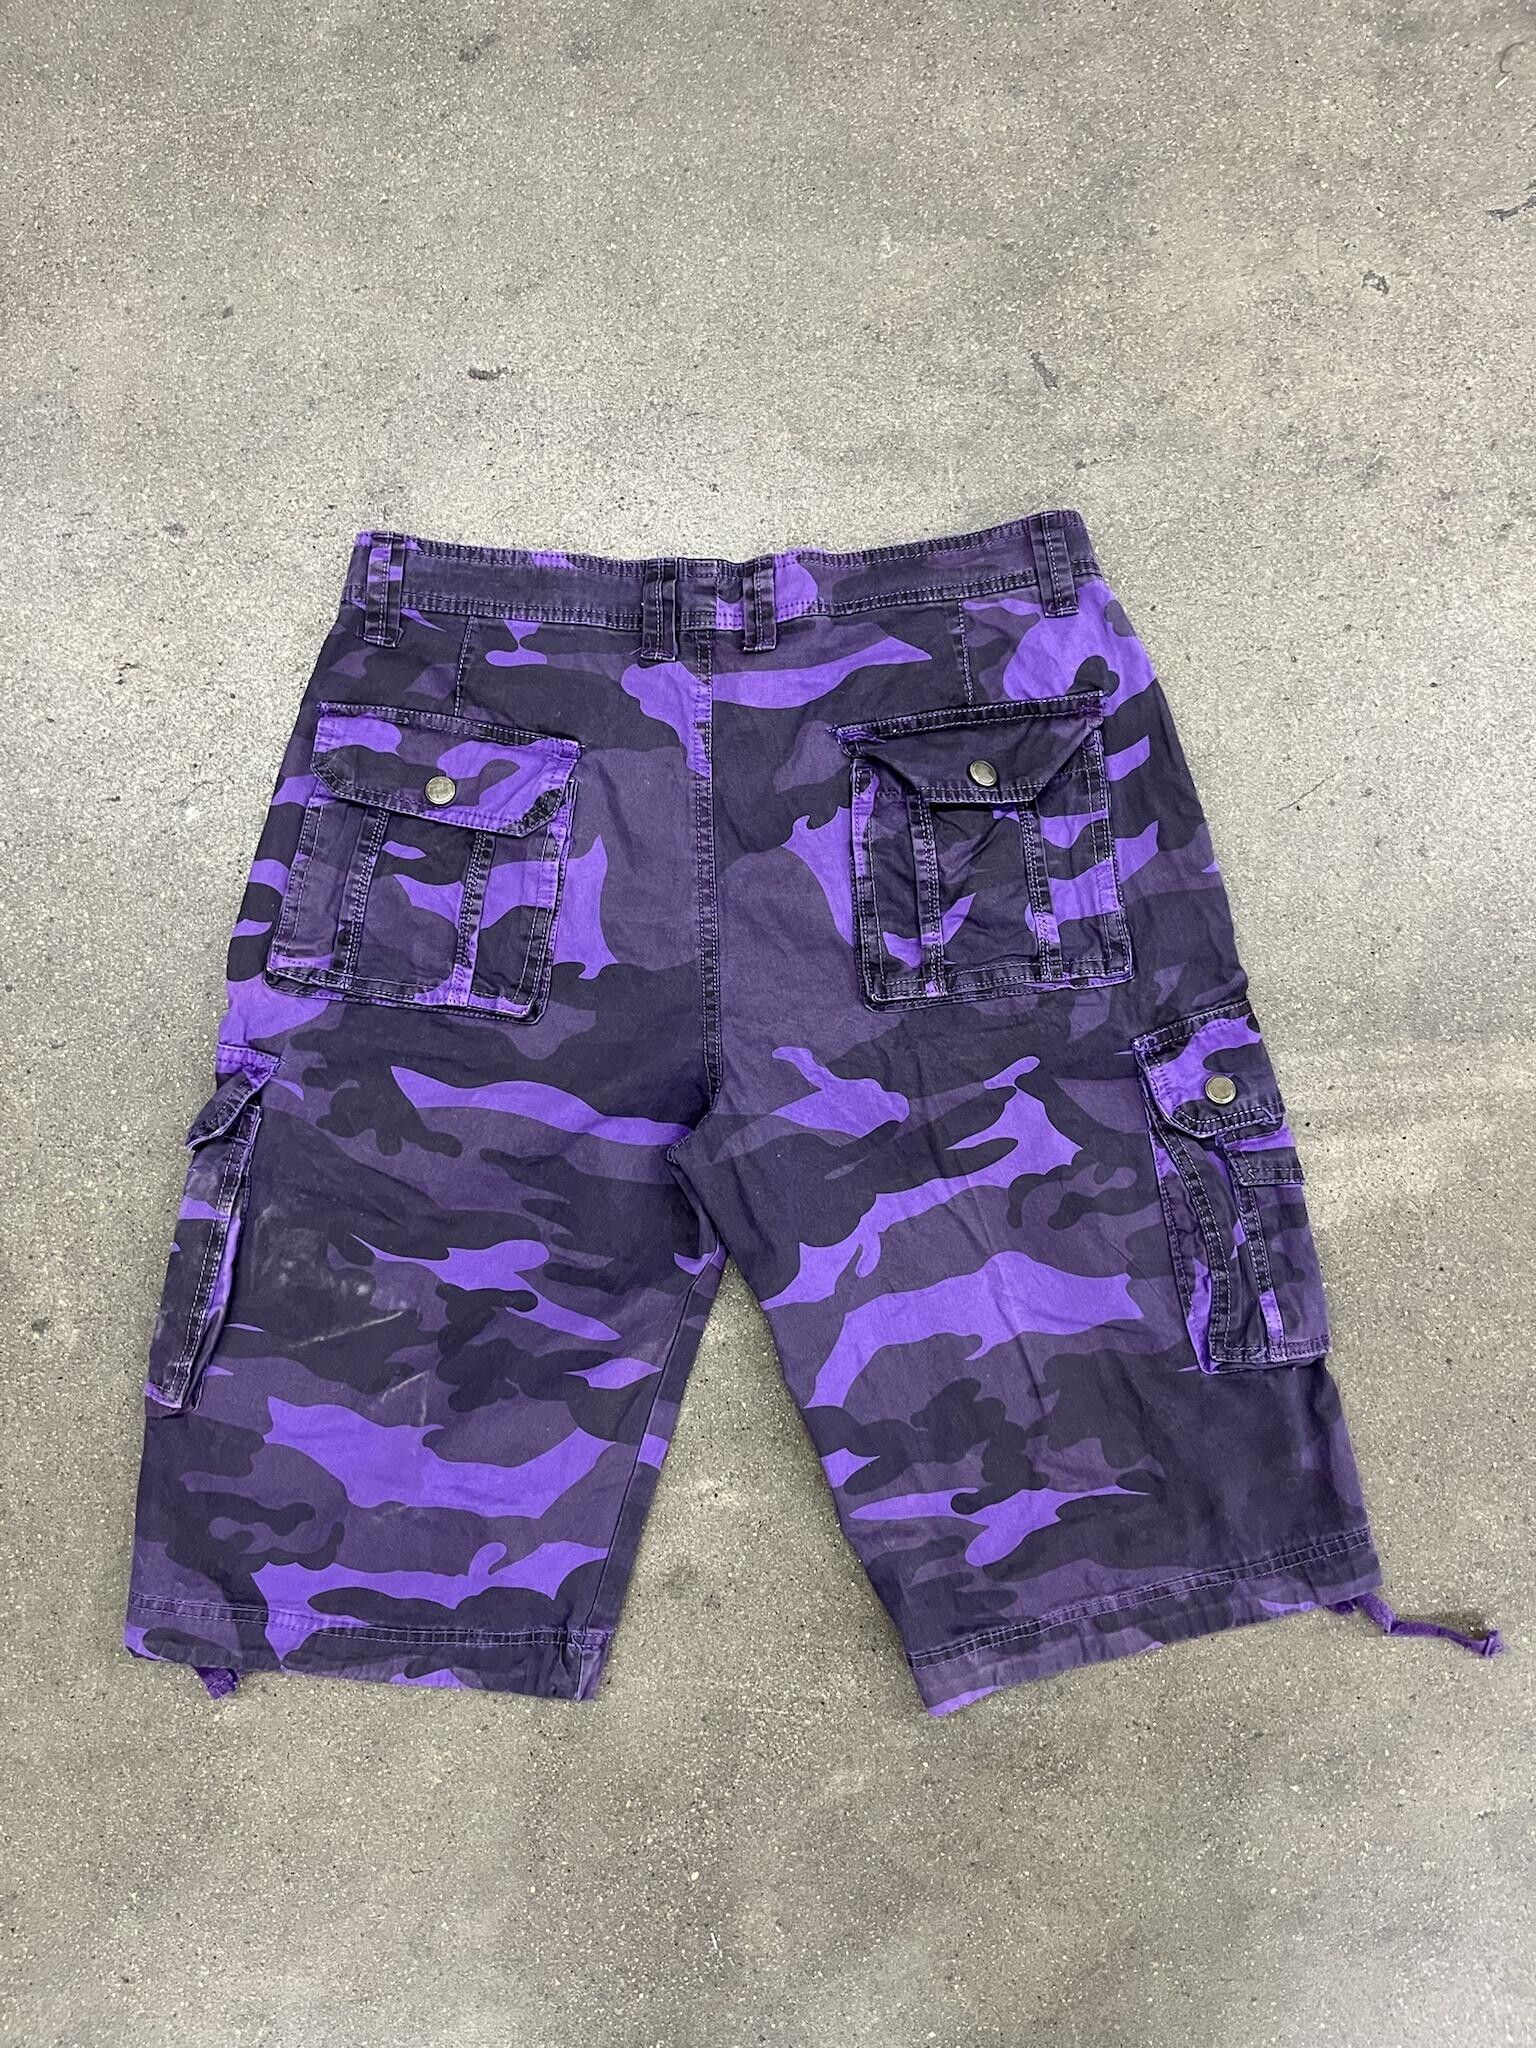 Streetwear Y2K Purple Camo 6 Pocket Cargo Shorts Size US 34 / EU 50 - 2 Preview